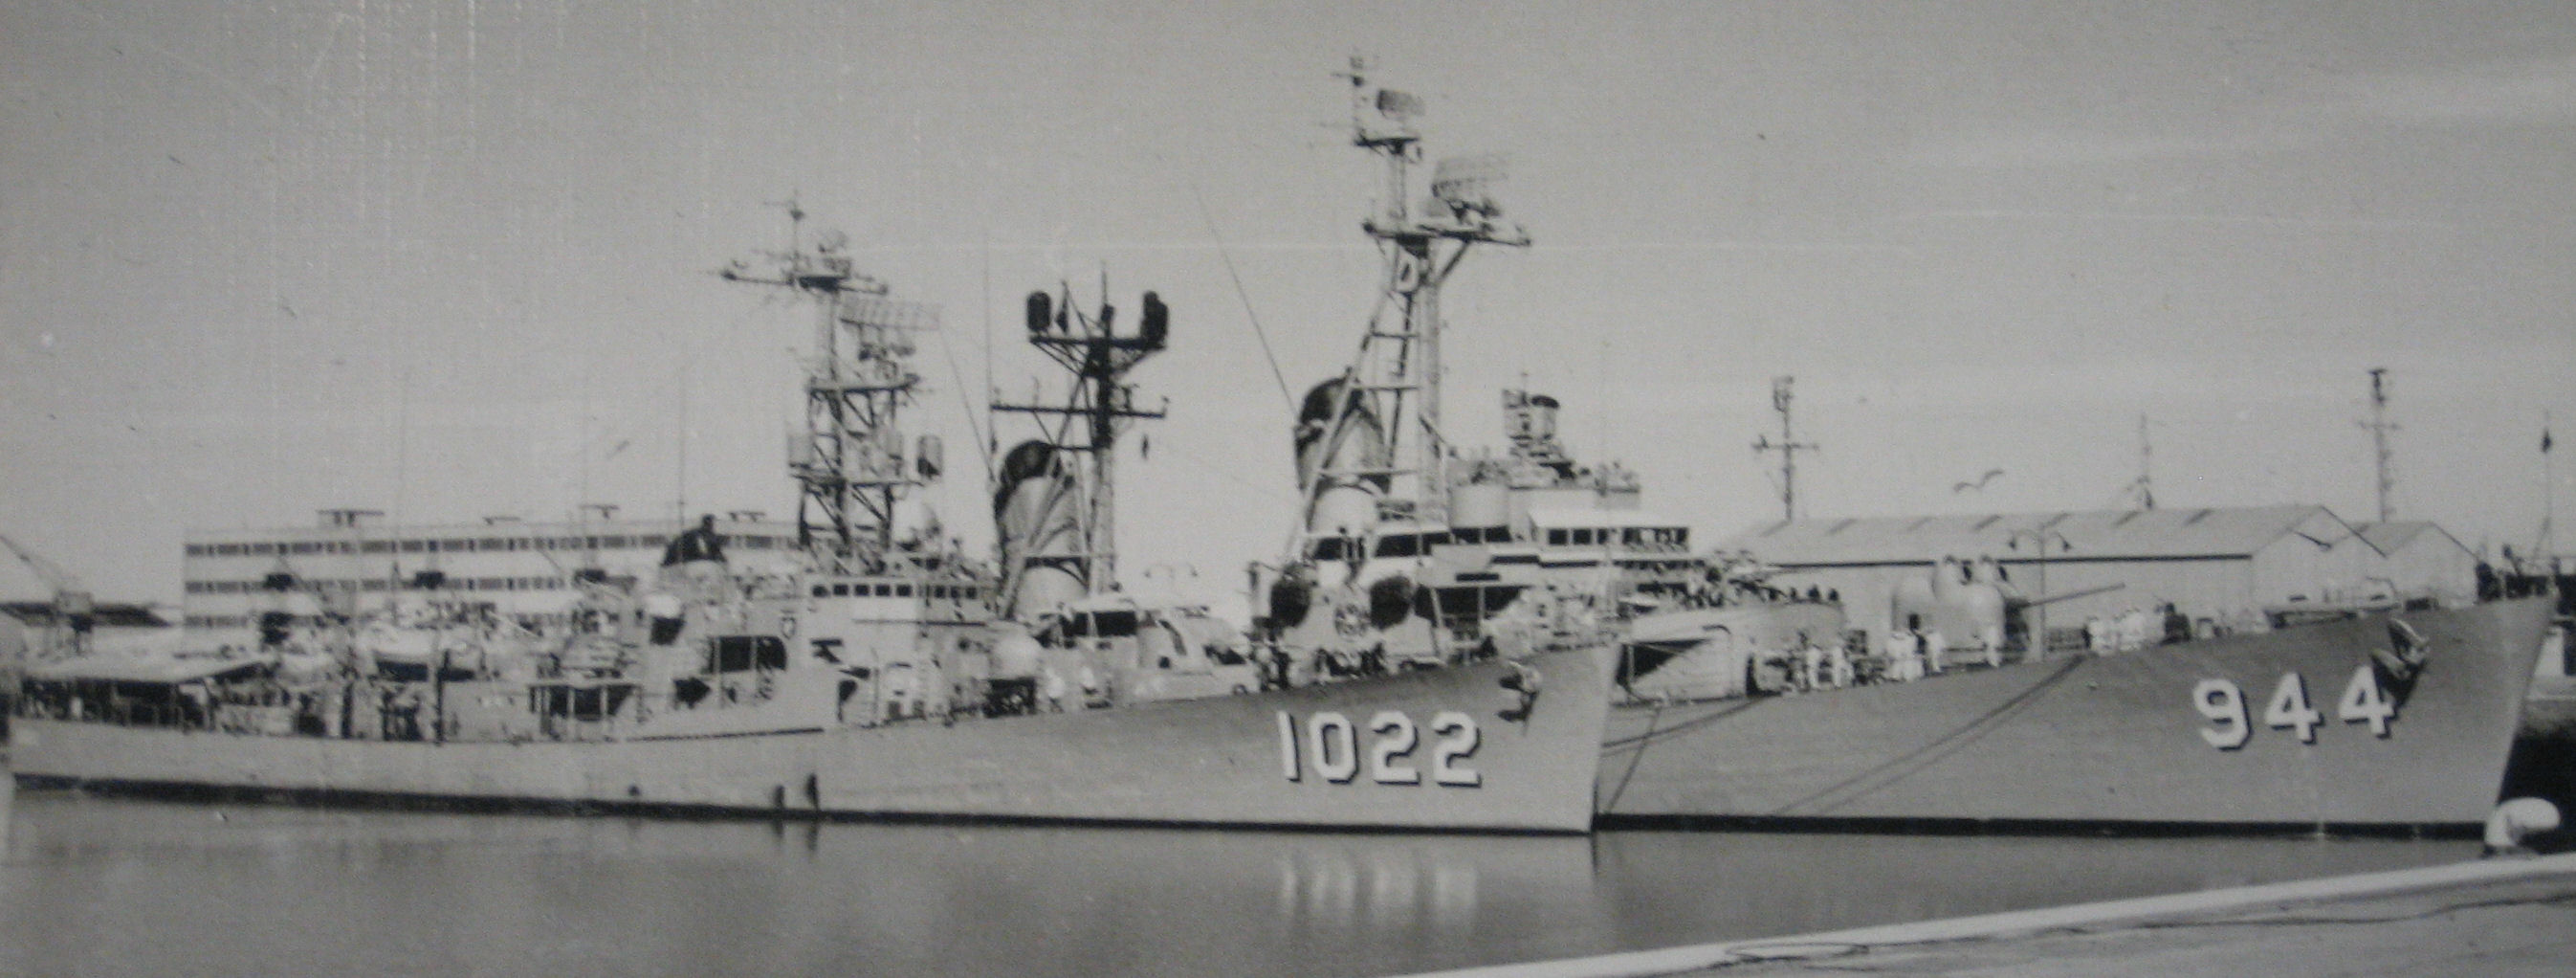 1962 - Unitas III